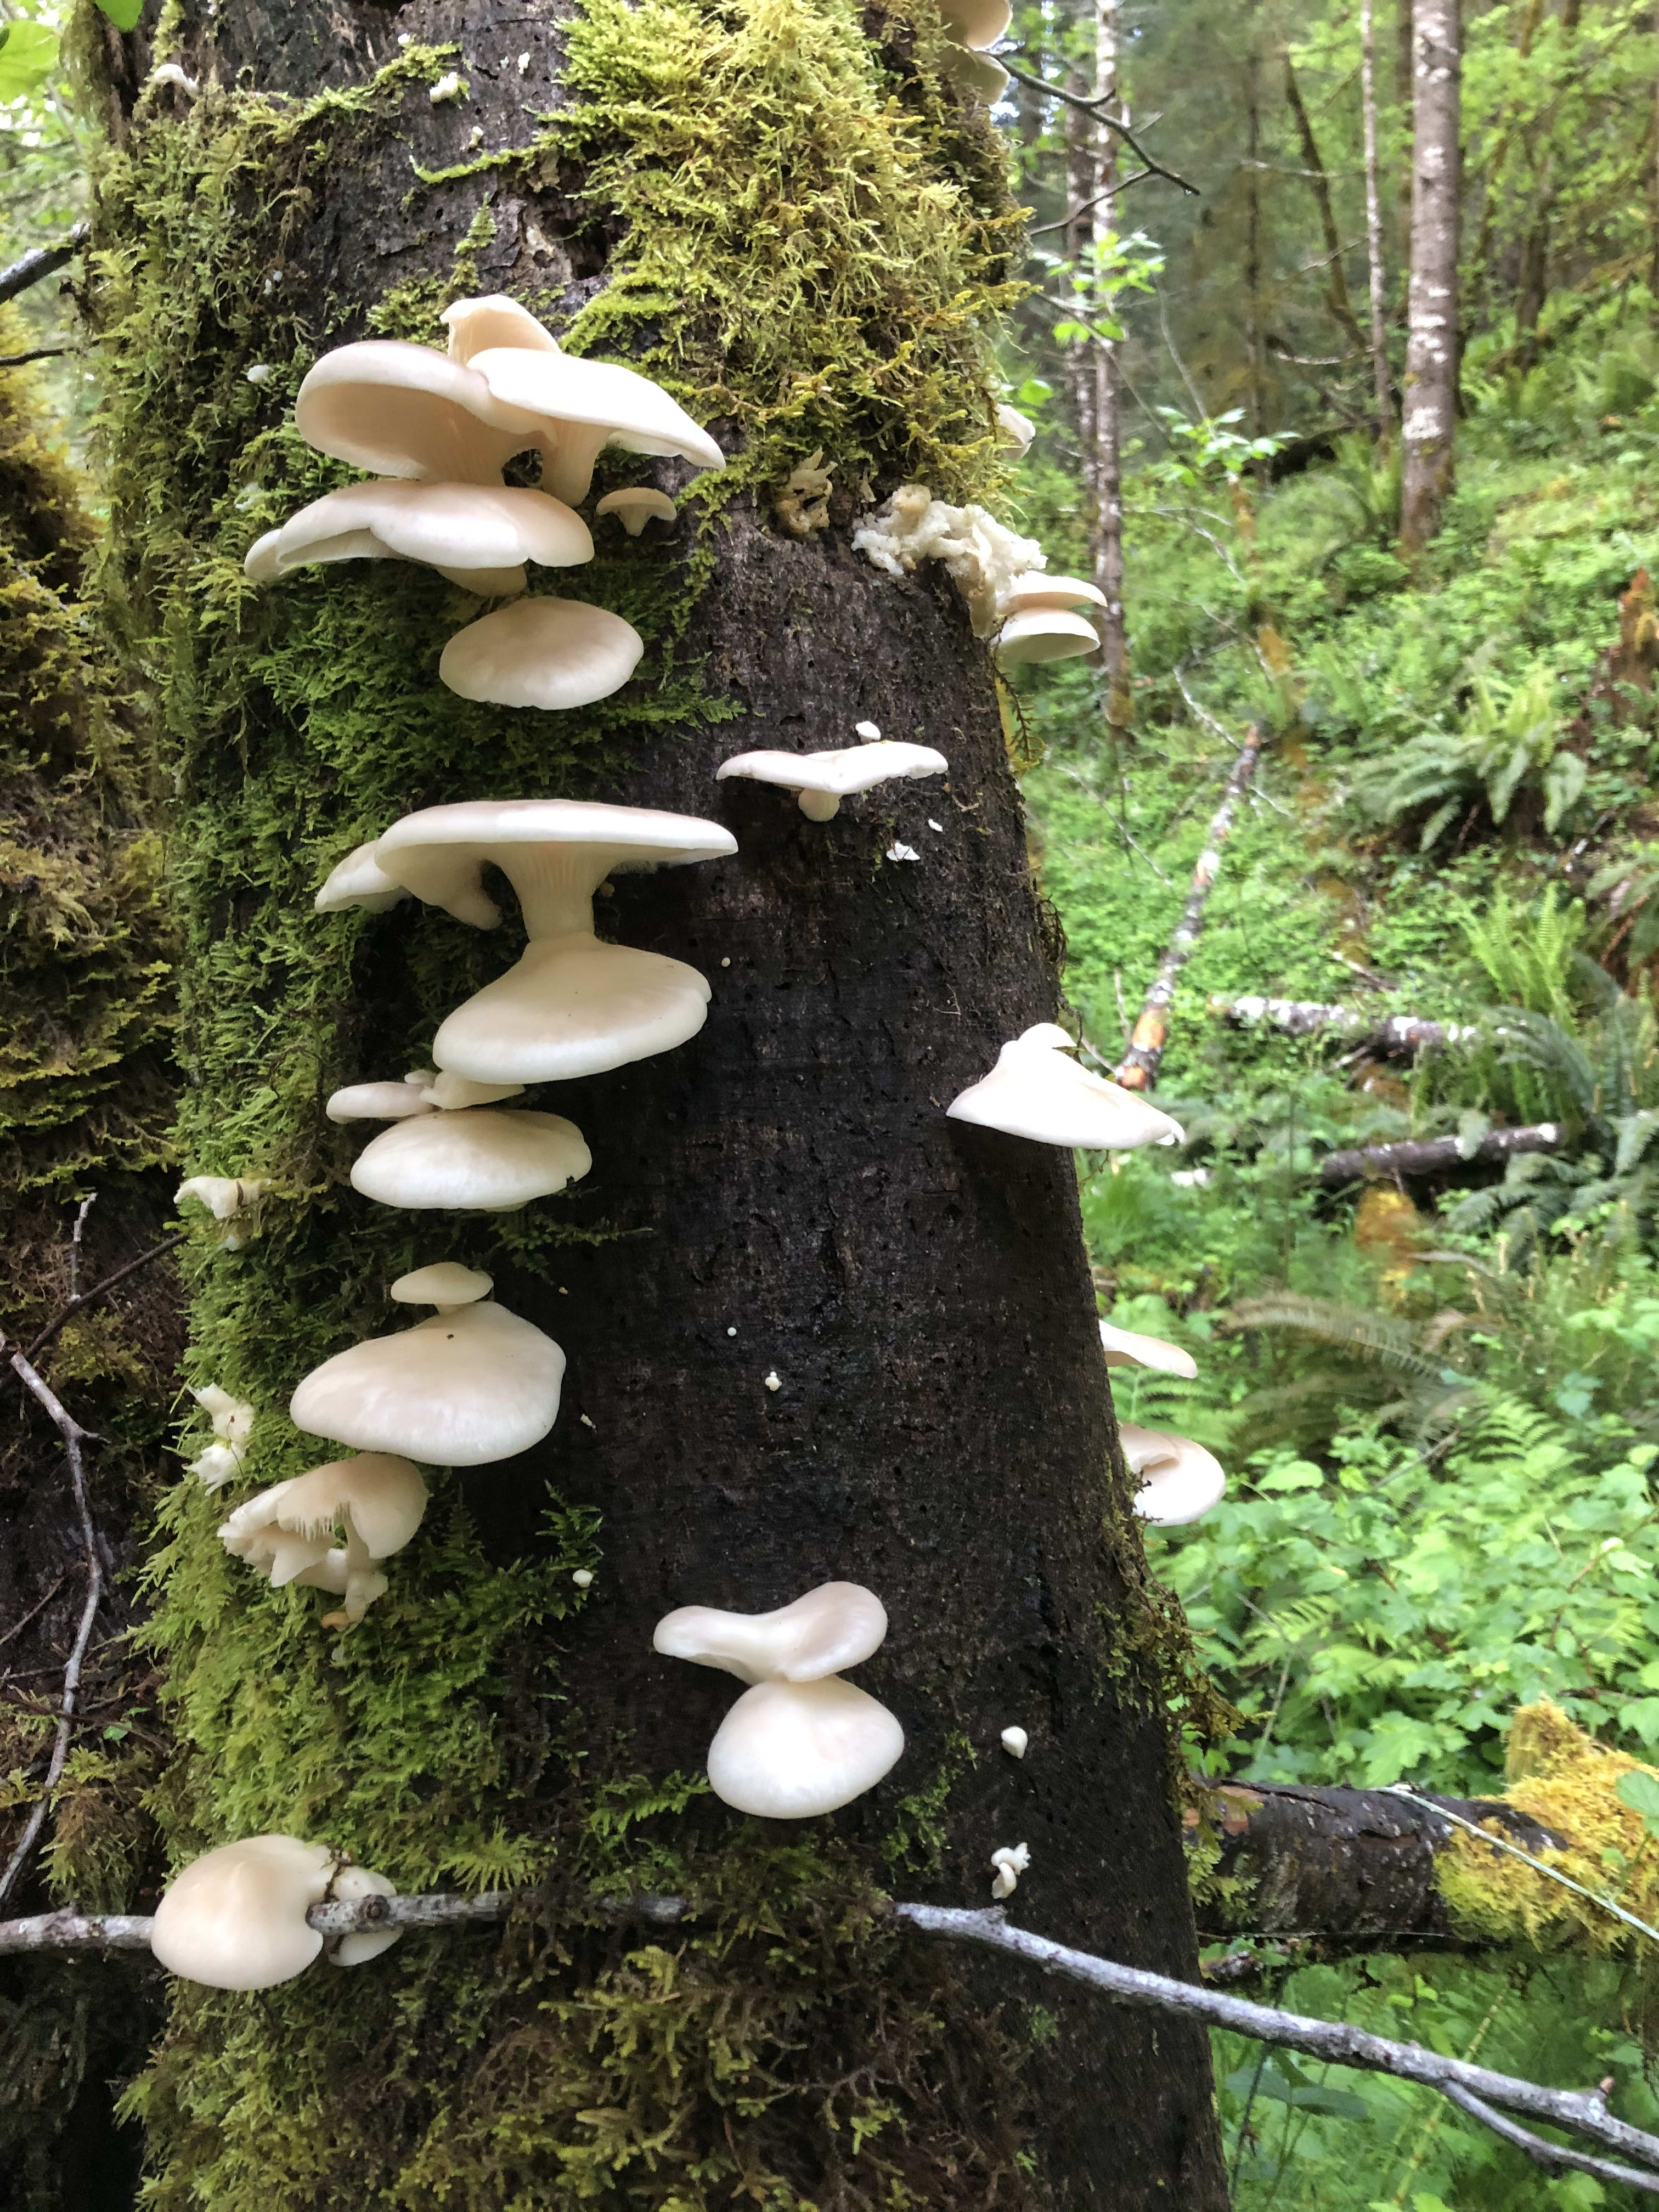 Oyster mushroom twice per year along the creek.